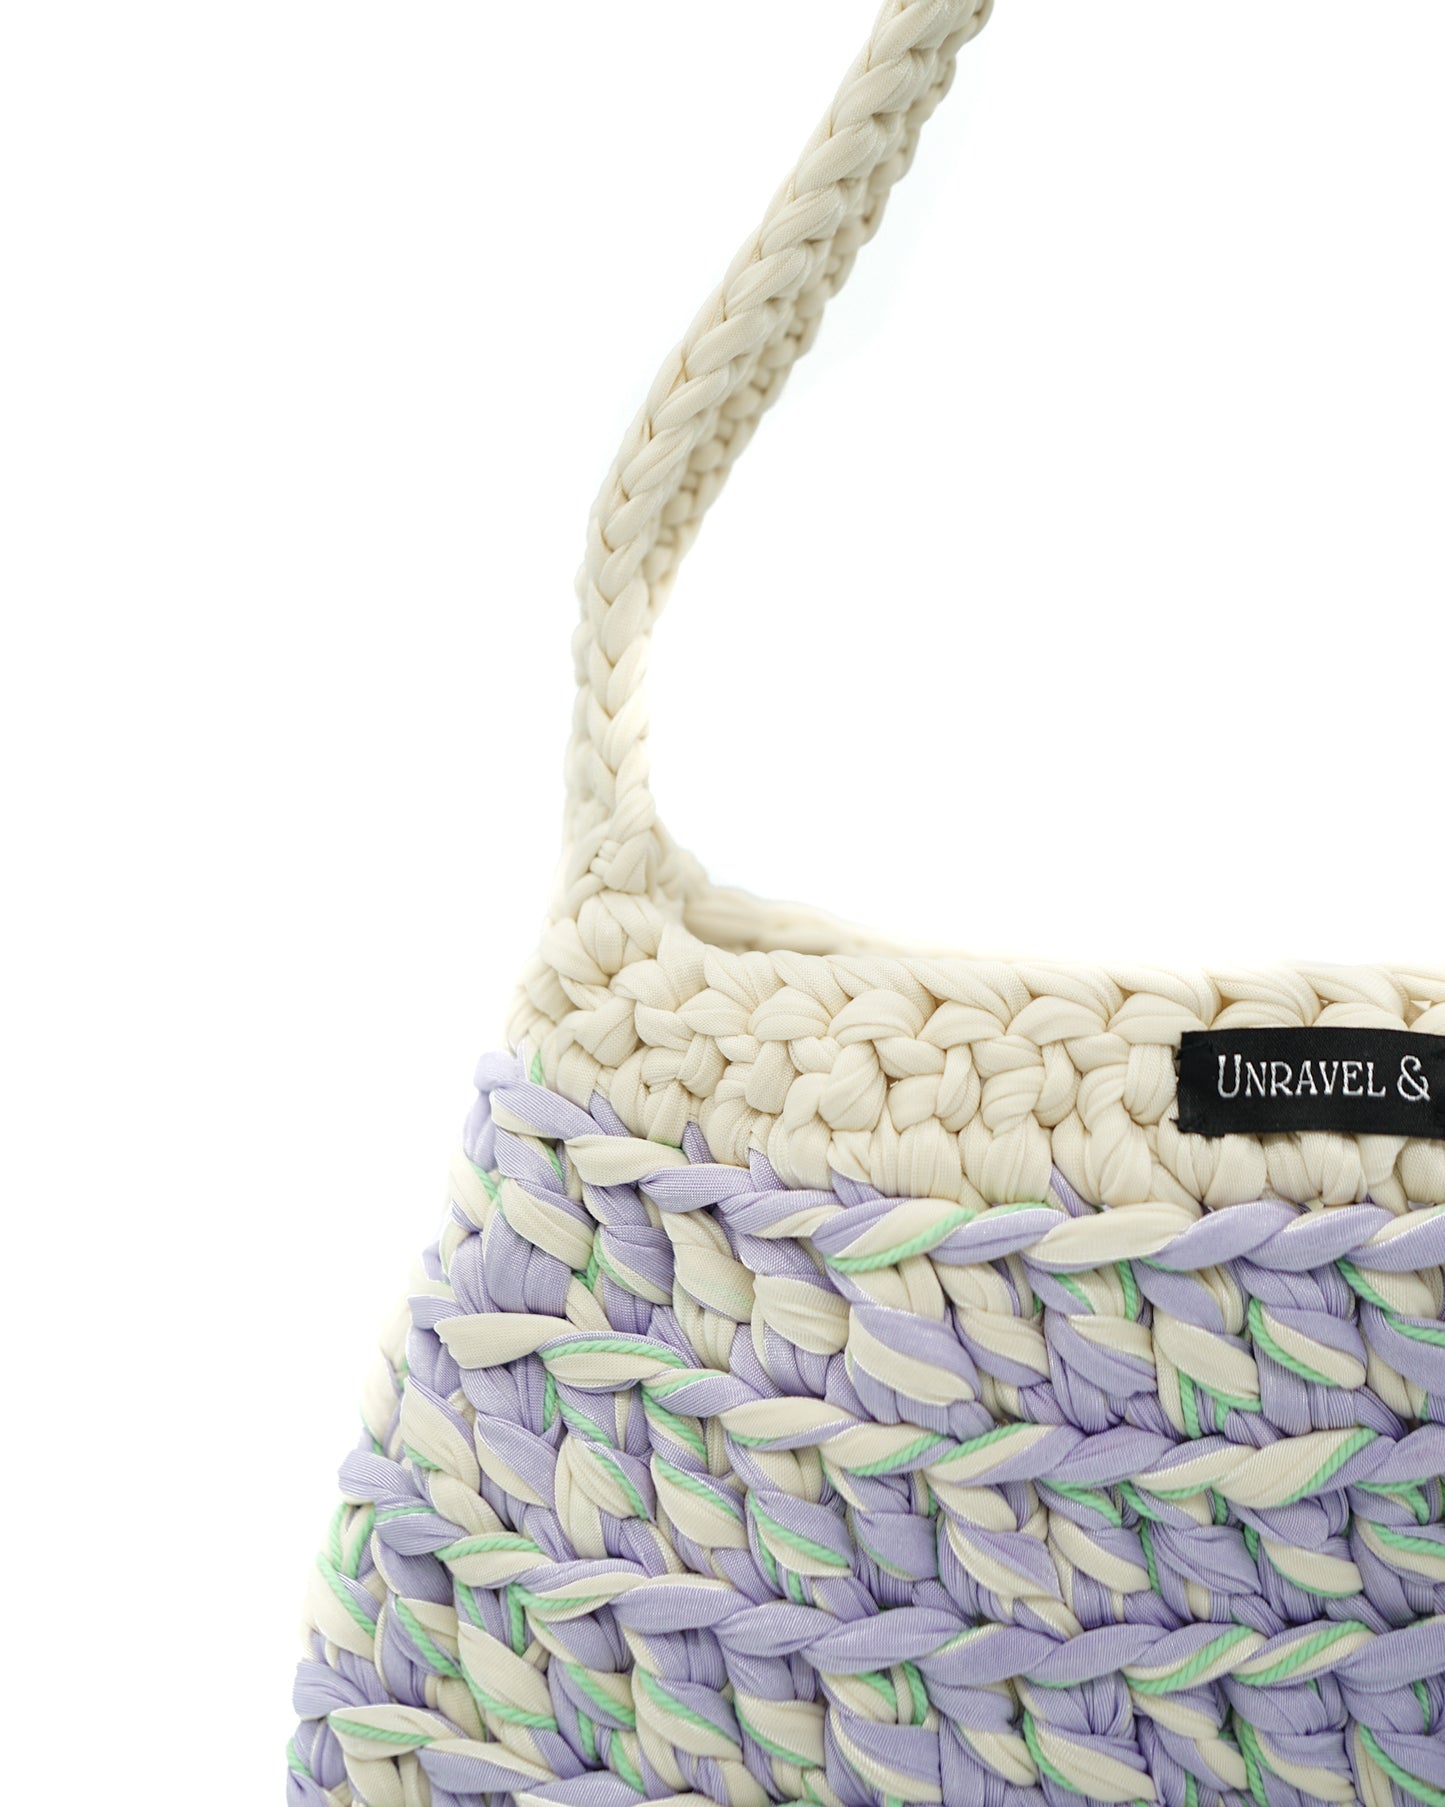 Lilac Garden Crochet Shoulder Bag